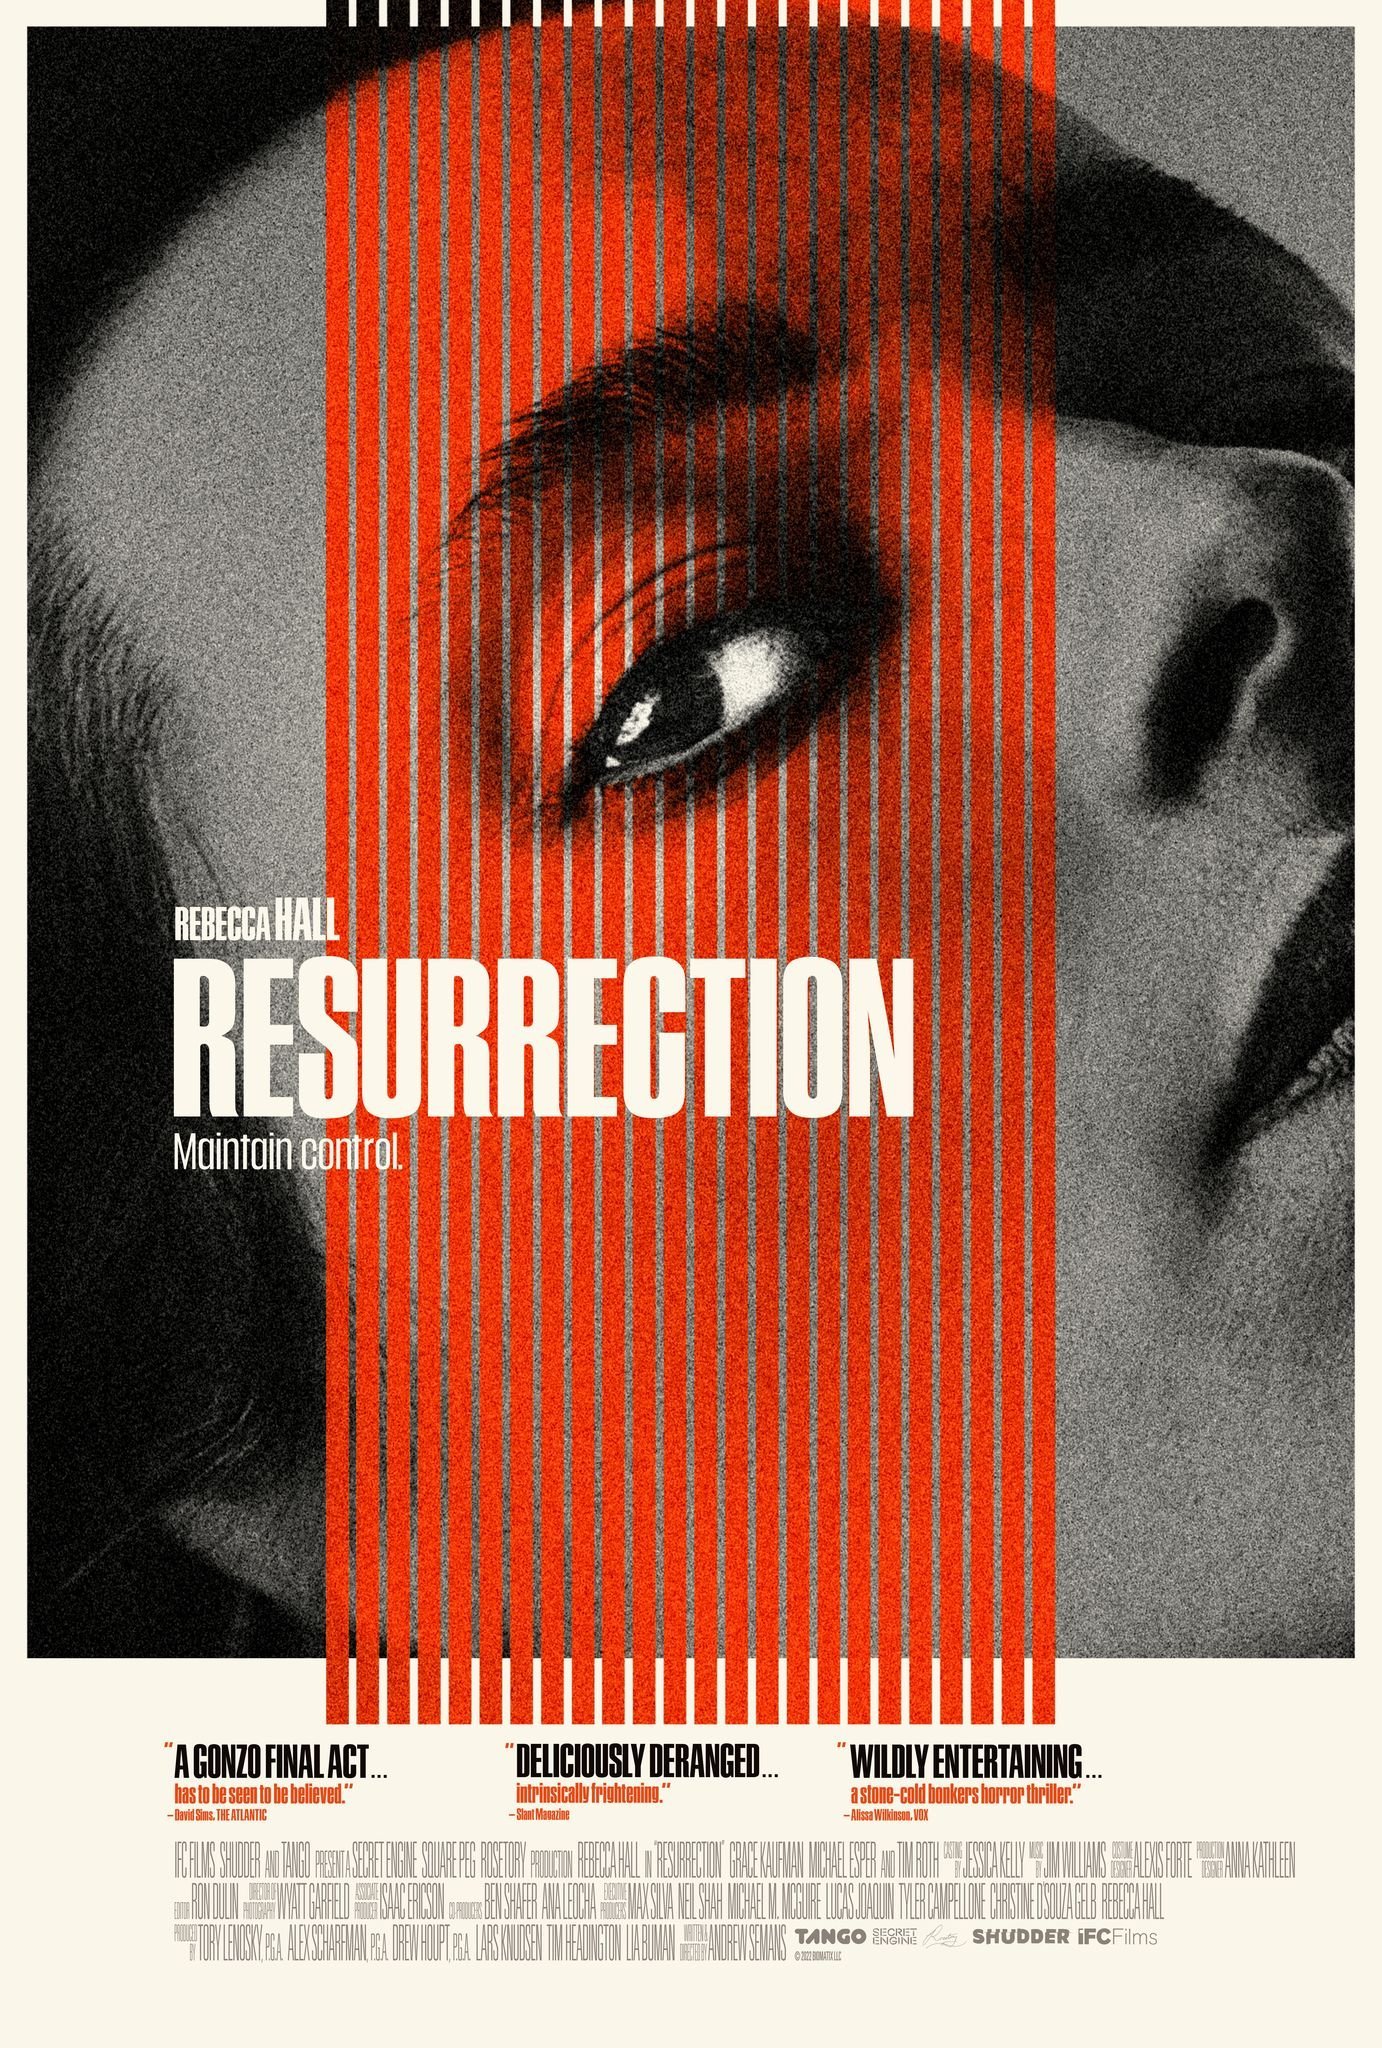 Resurrection image © IFC Films